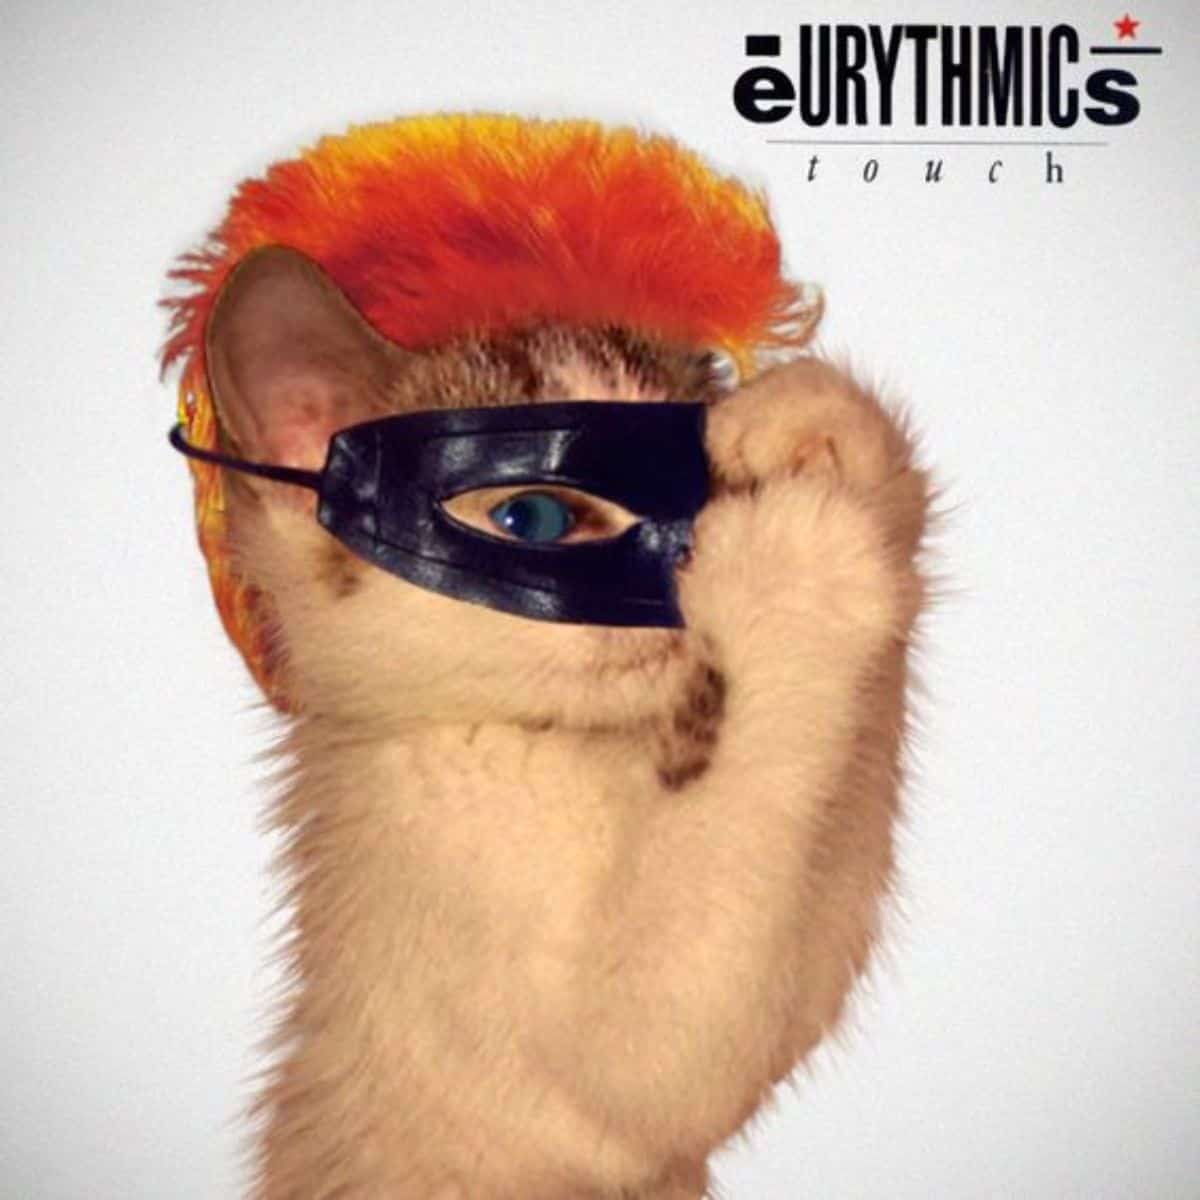 cat version of eurythmics' album cover